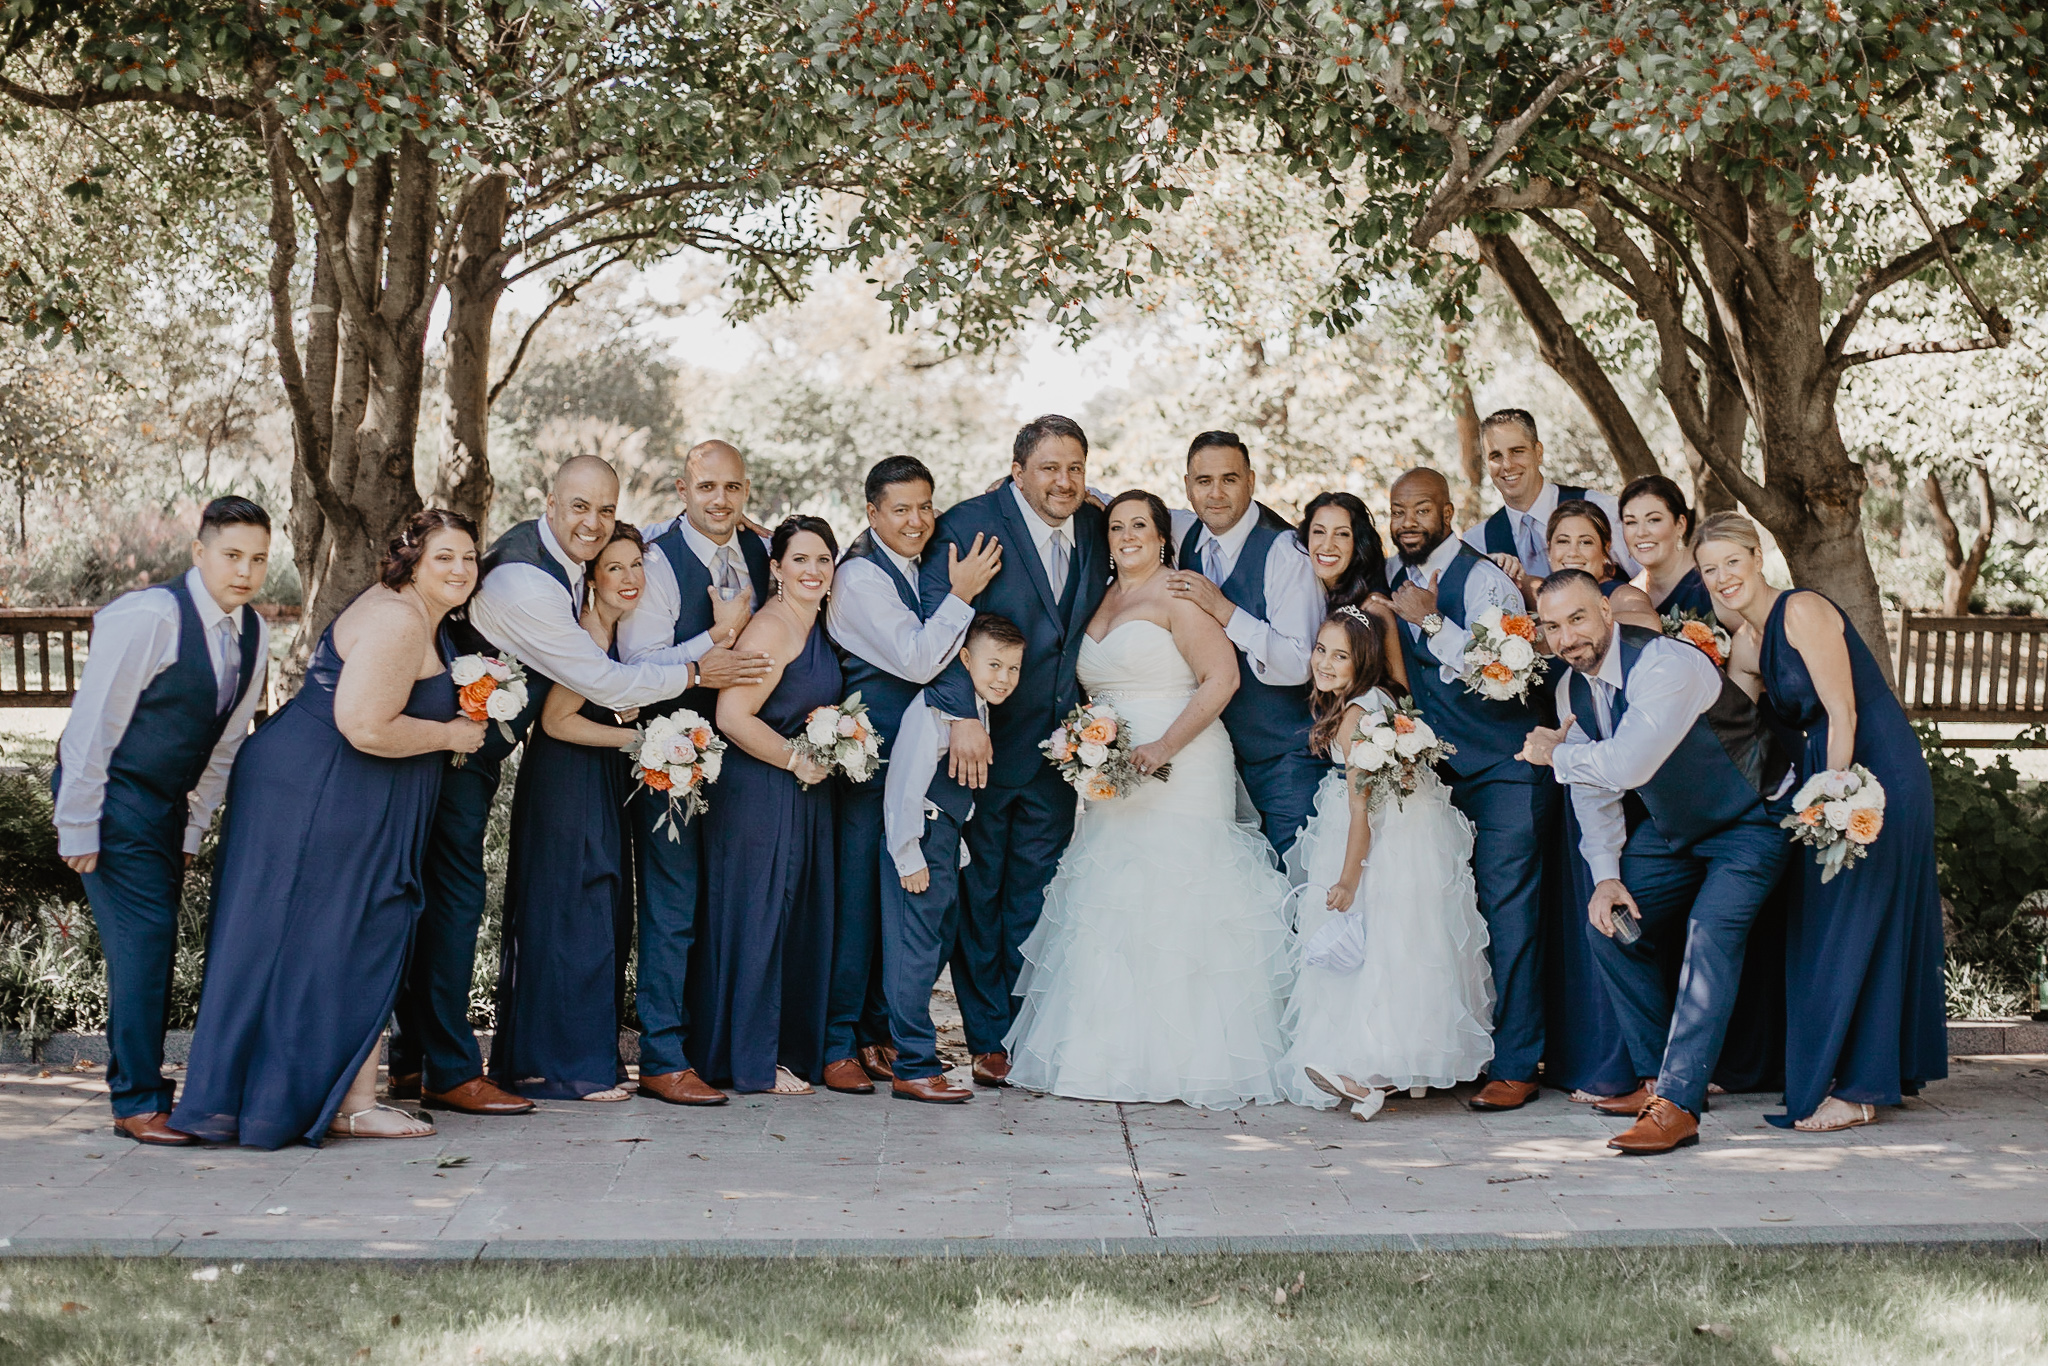 Heather + Javier | Navy and Gold Dallas Texas Discovery Gardens Botanical Wedding | Columbus and Dallas Wedding + Engagement Photographer | Catherine Milliron Photography